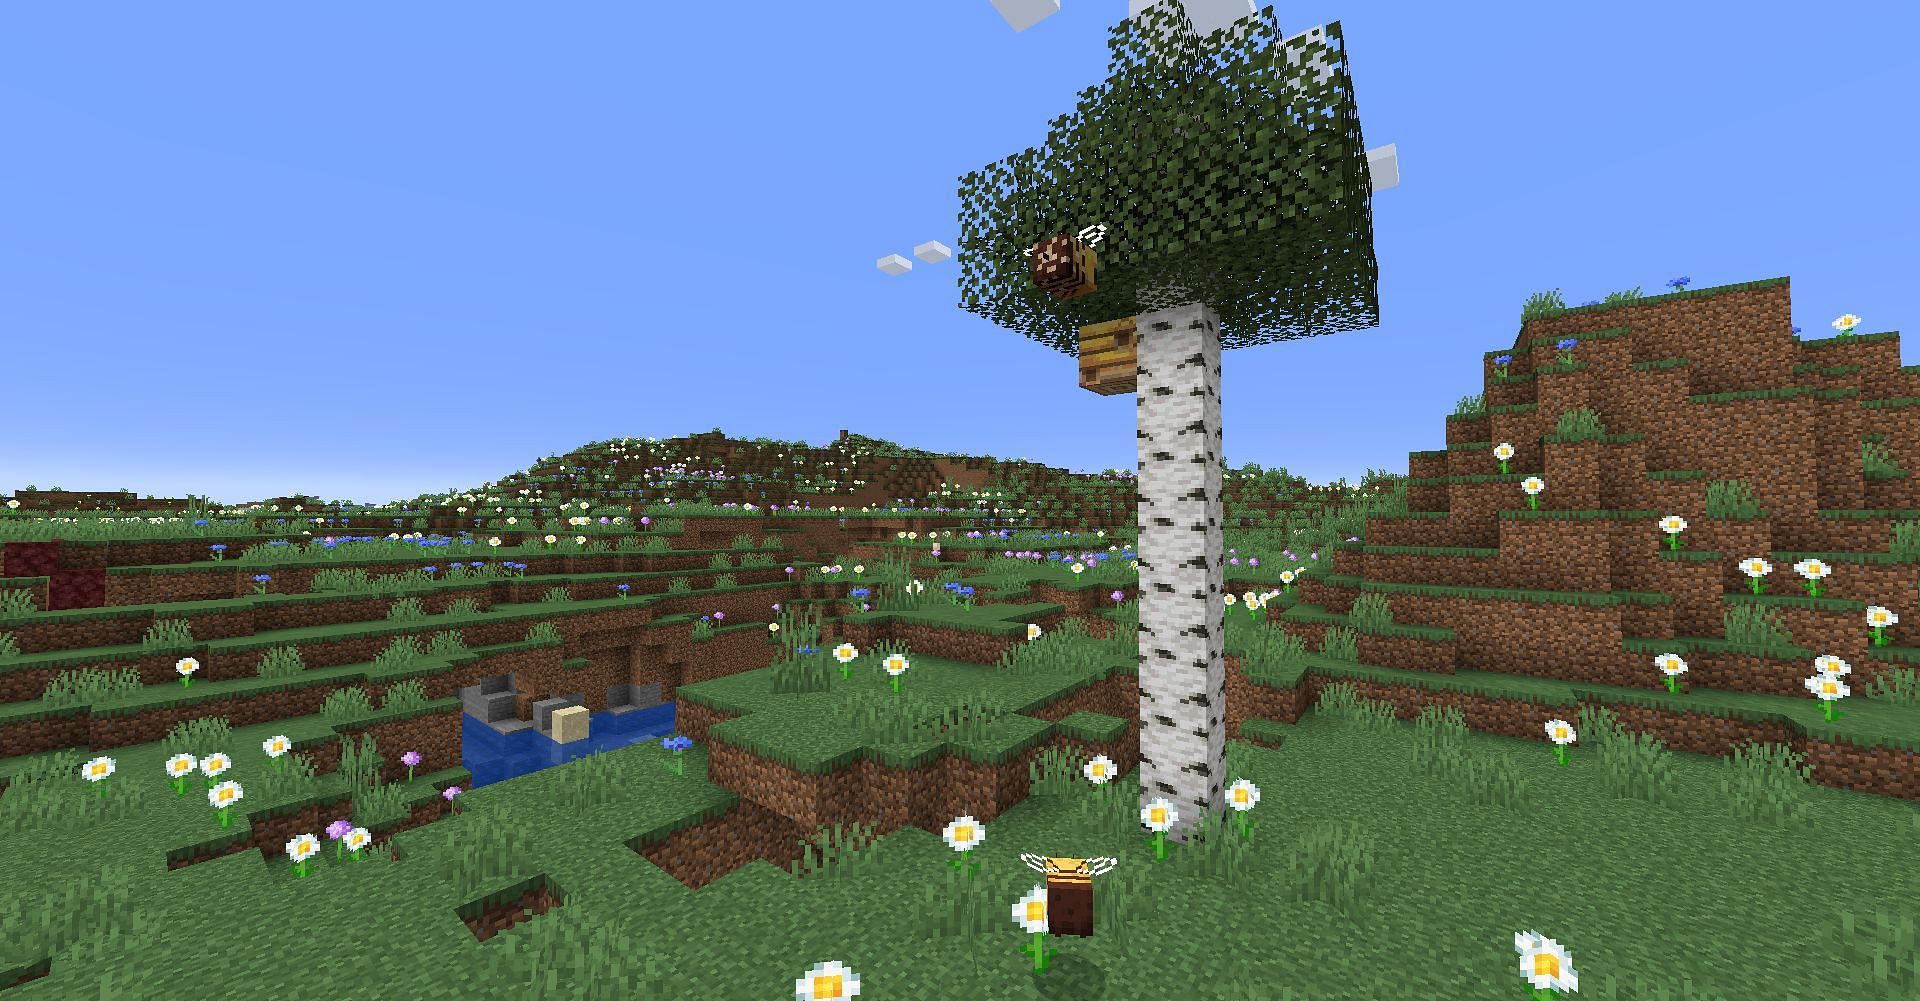 Meadow biome in Minecraft 1.18 update (Image via Minecraft Wiki)